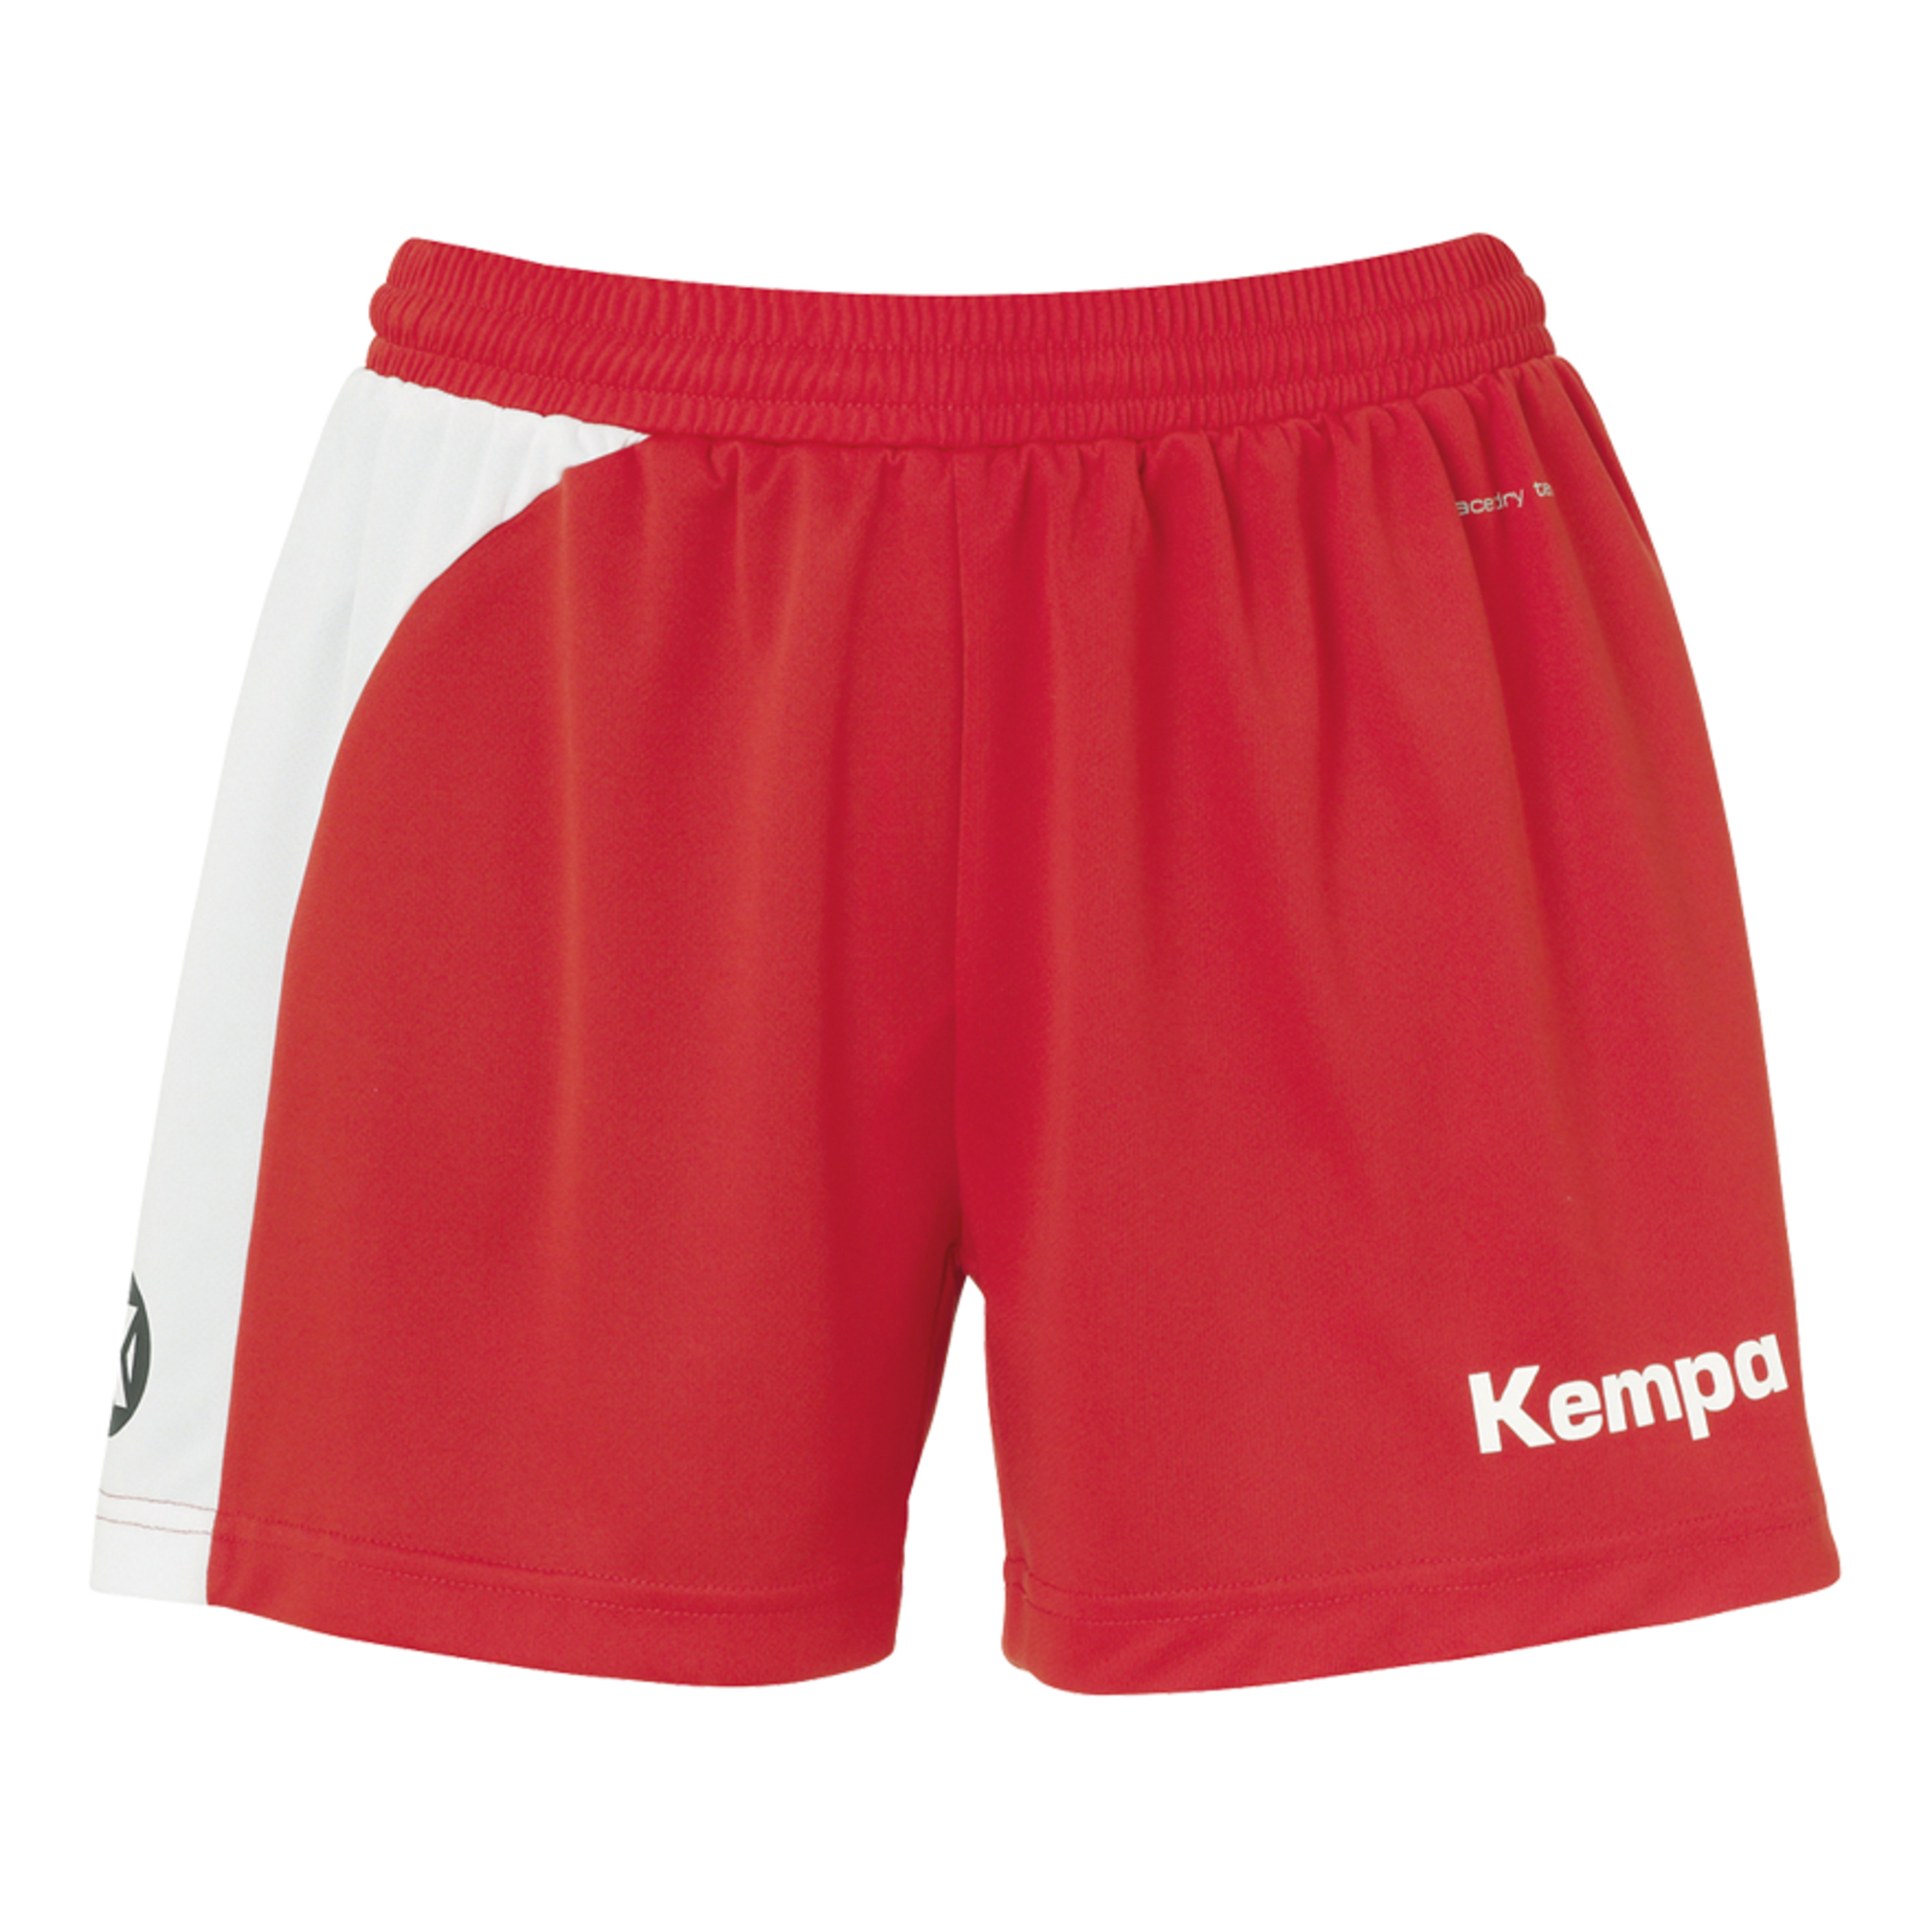 Peak Shorts De Mujer Rojo/blanco Kempa - rojo - 